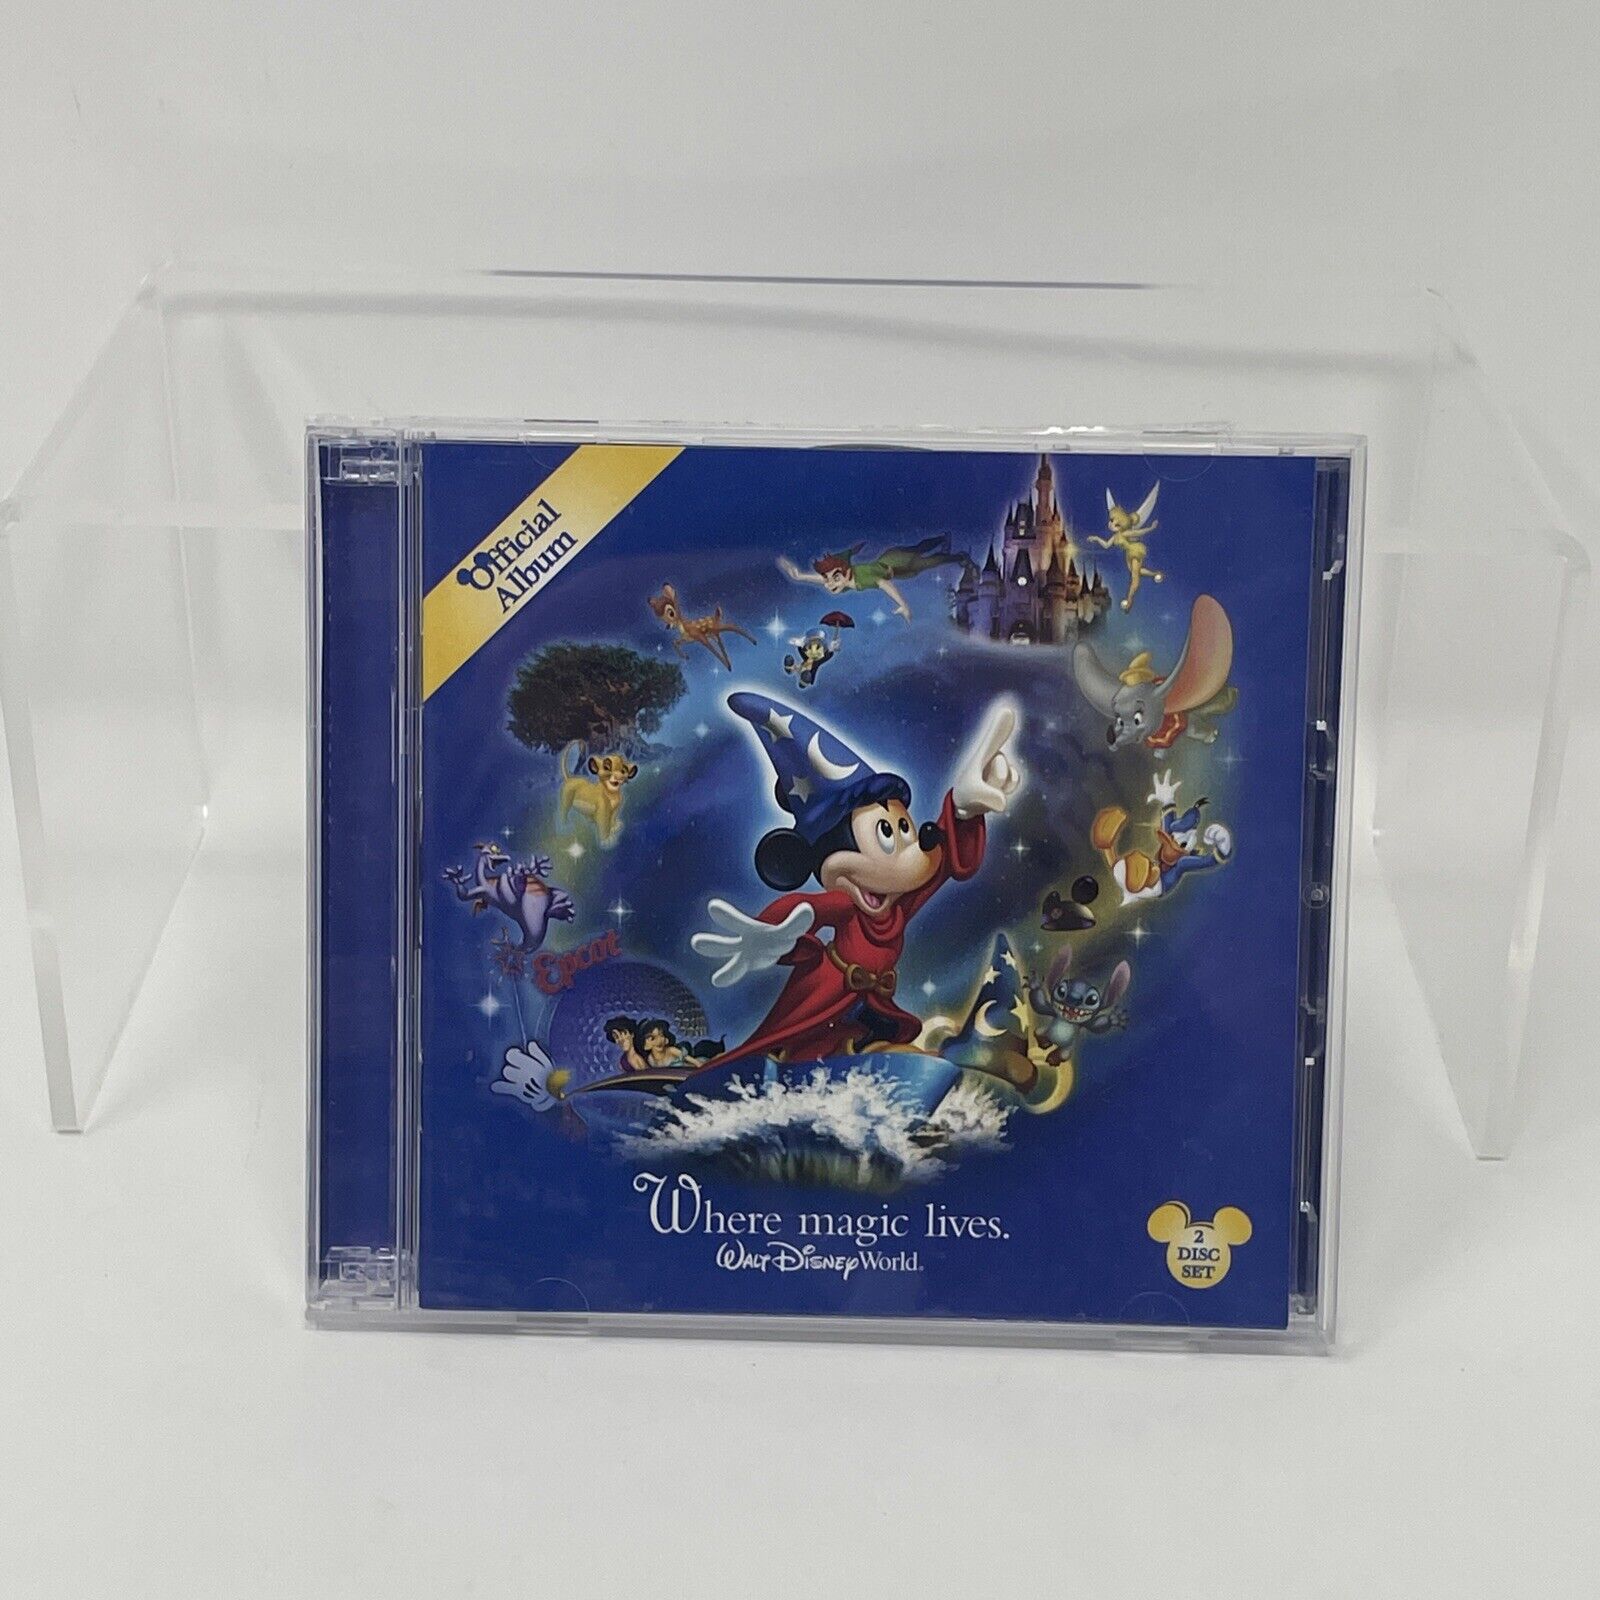 Walt Disney World Official Album Where Magic Lives by Various Artists